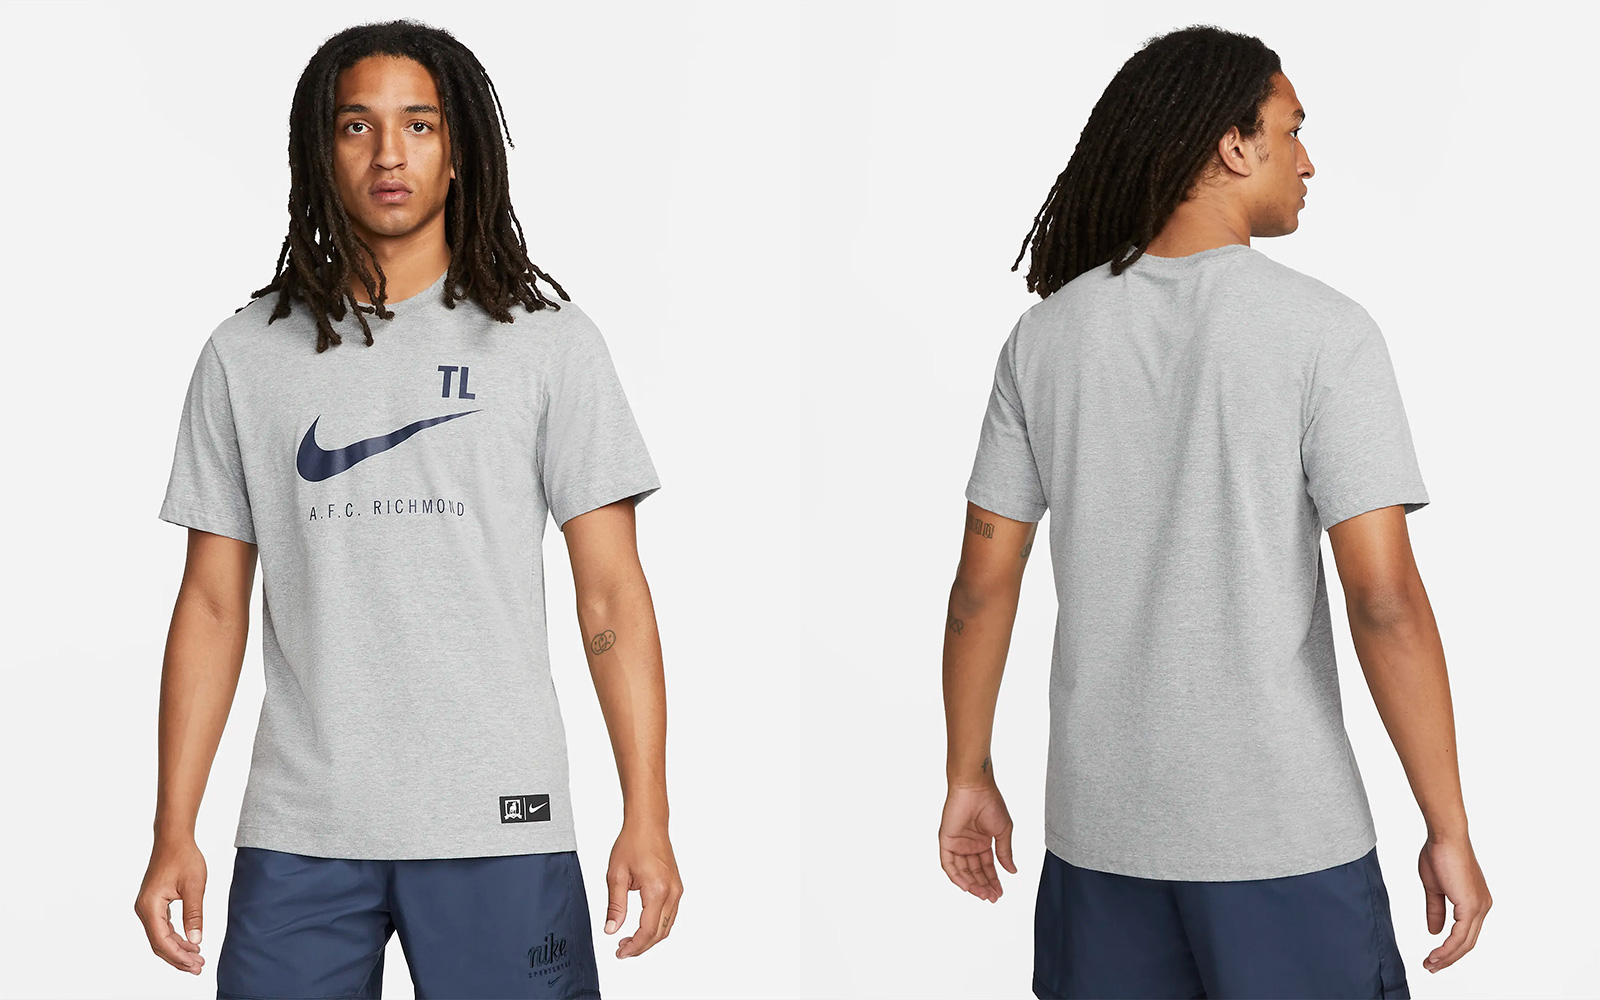 AFC Richmond Grey T-Shirt